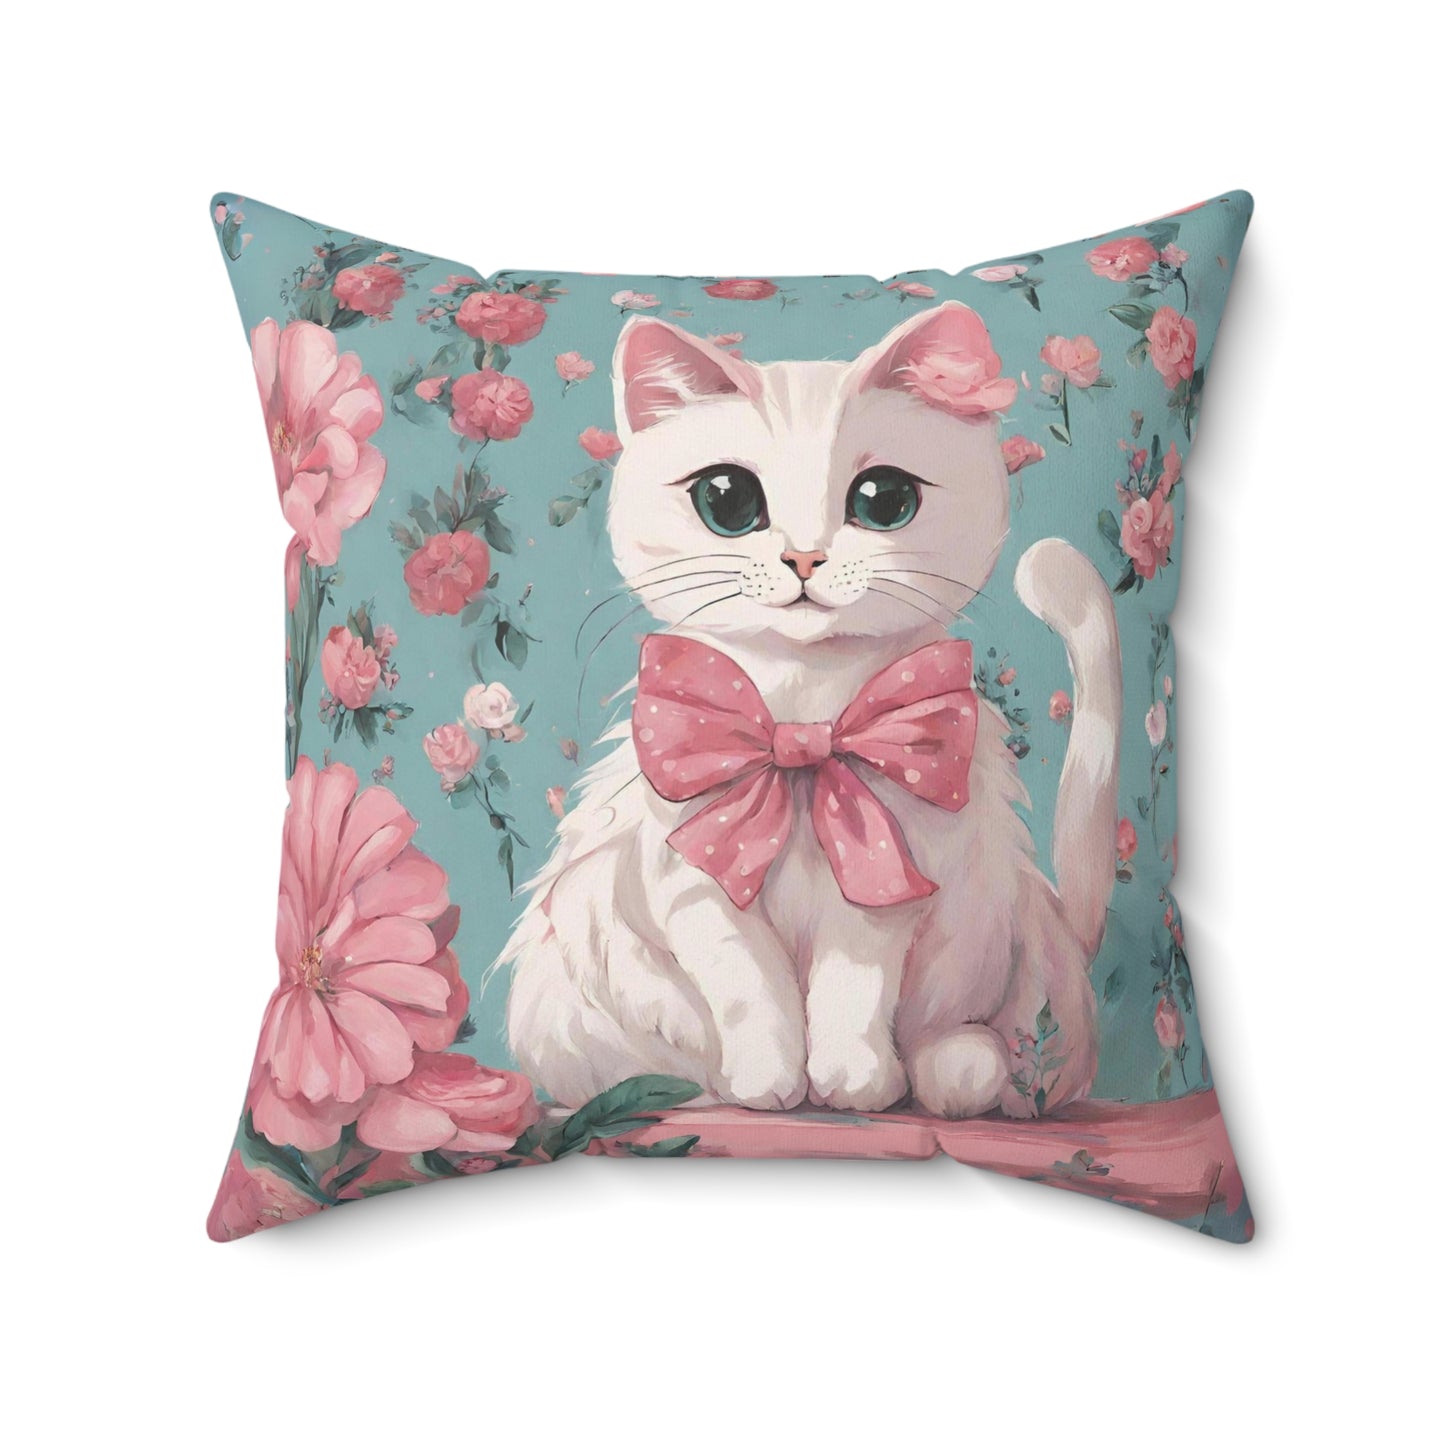 Floral Cat Pillow, Cute cat Cushion, vintage home decor, victorian pillow, Decorative pillow, Cat and flowers cushion, cottagecore aesthetic